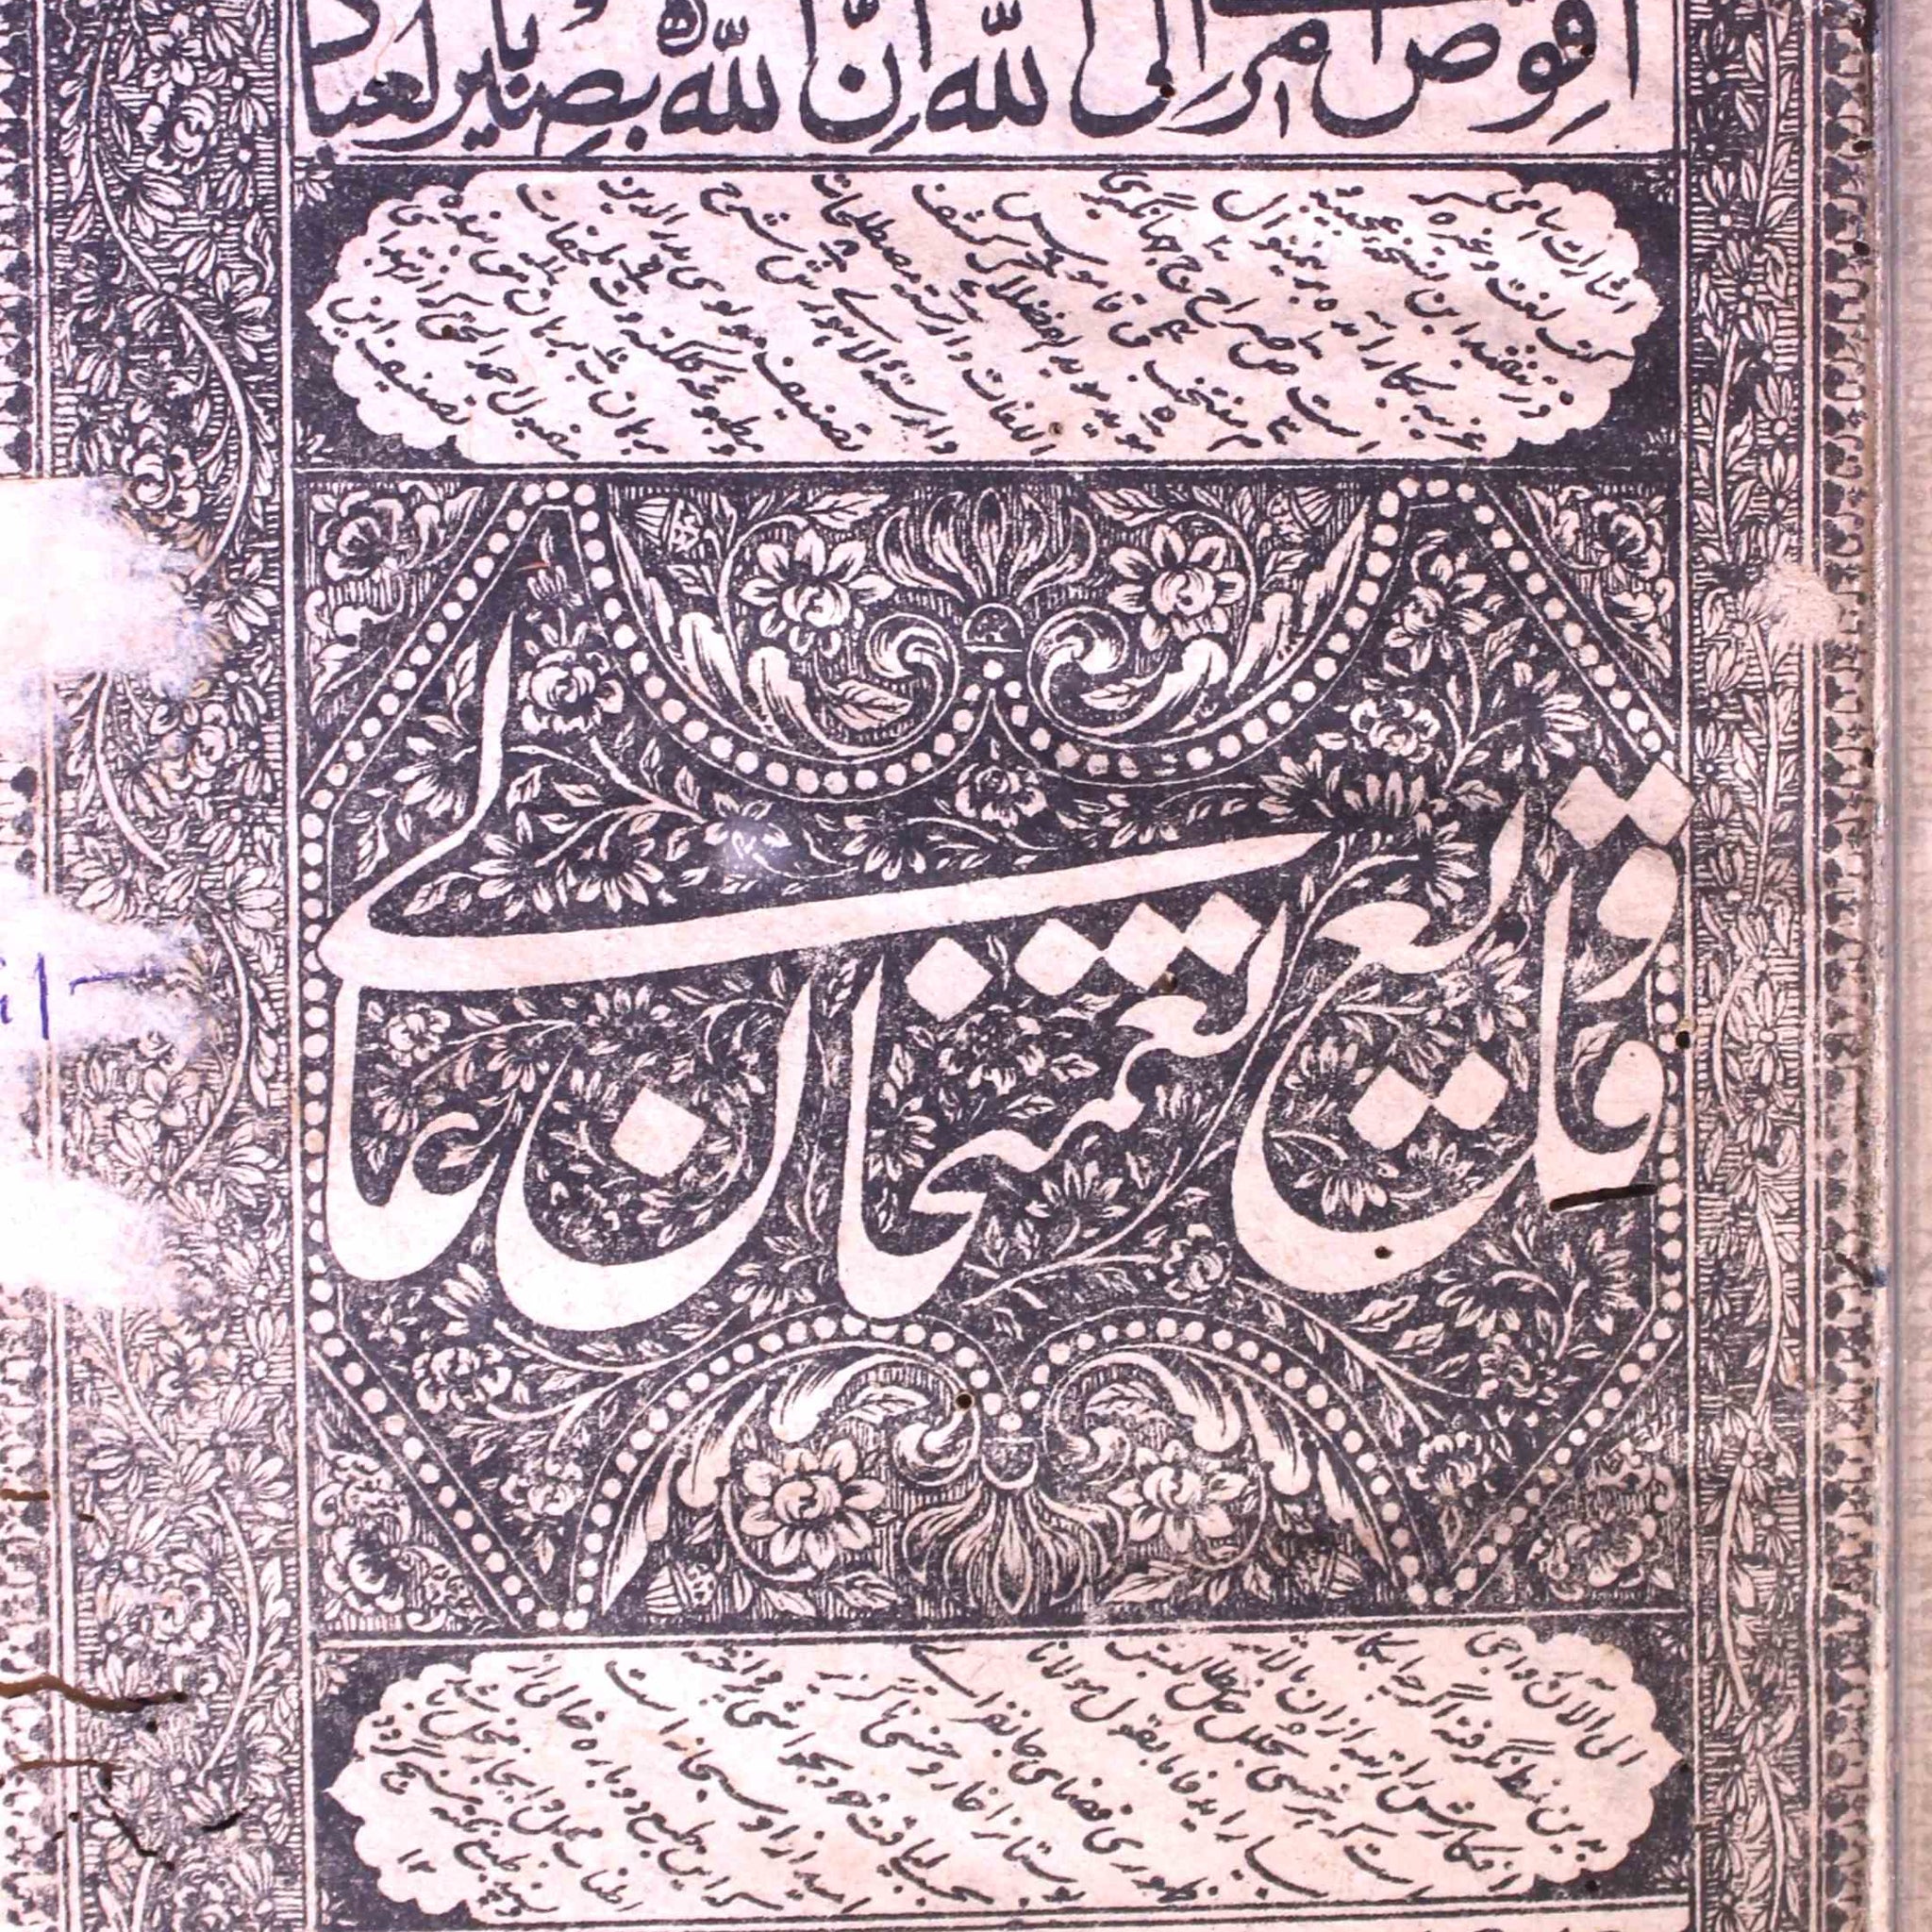 Waqae Nemat Khan Aali